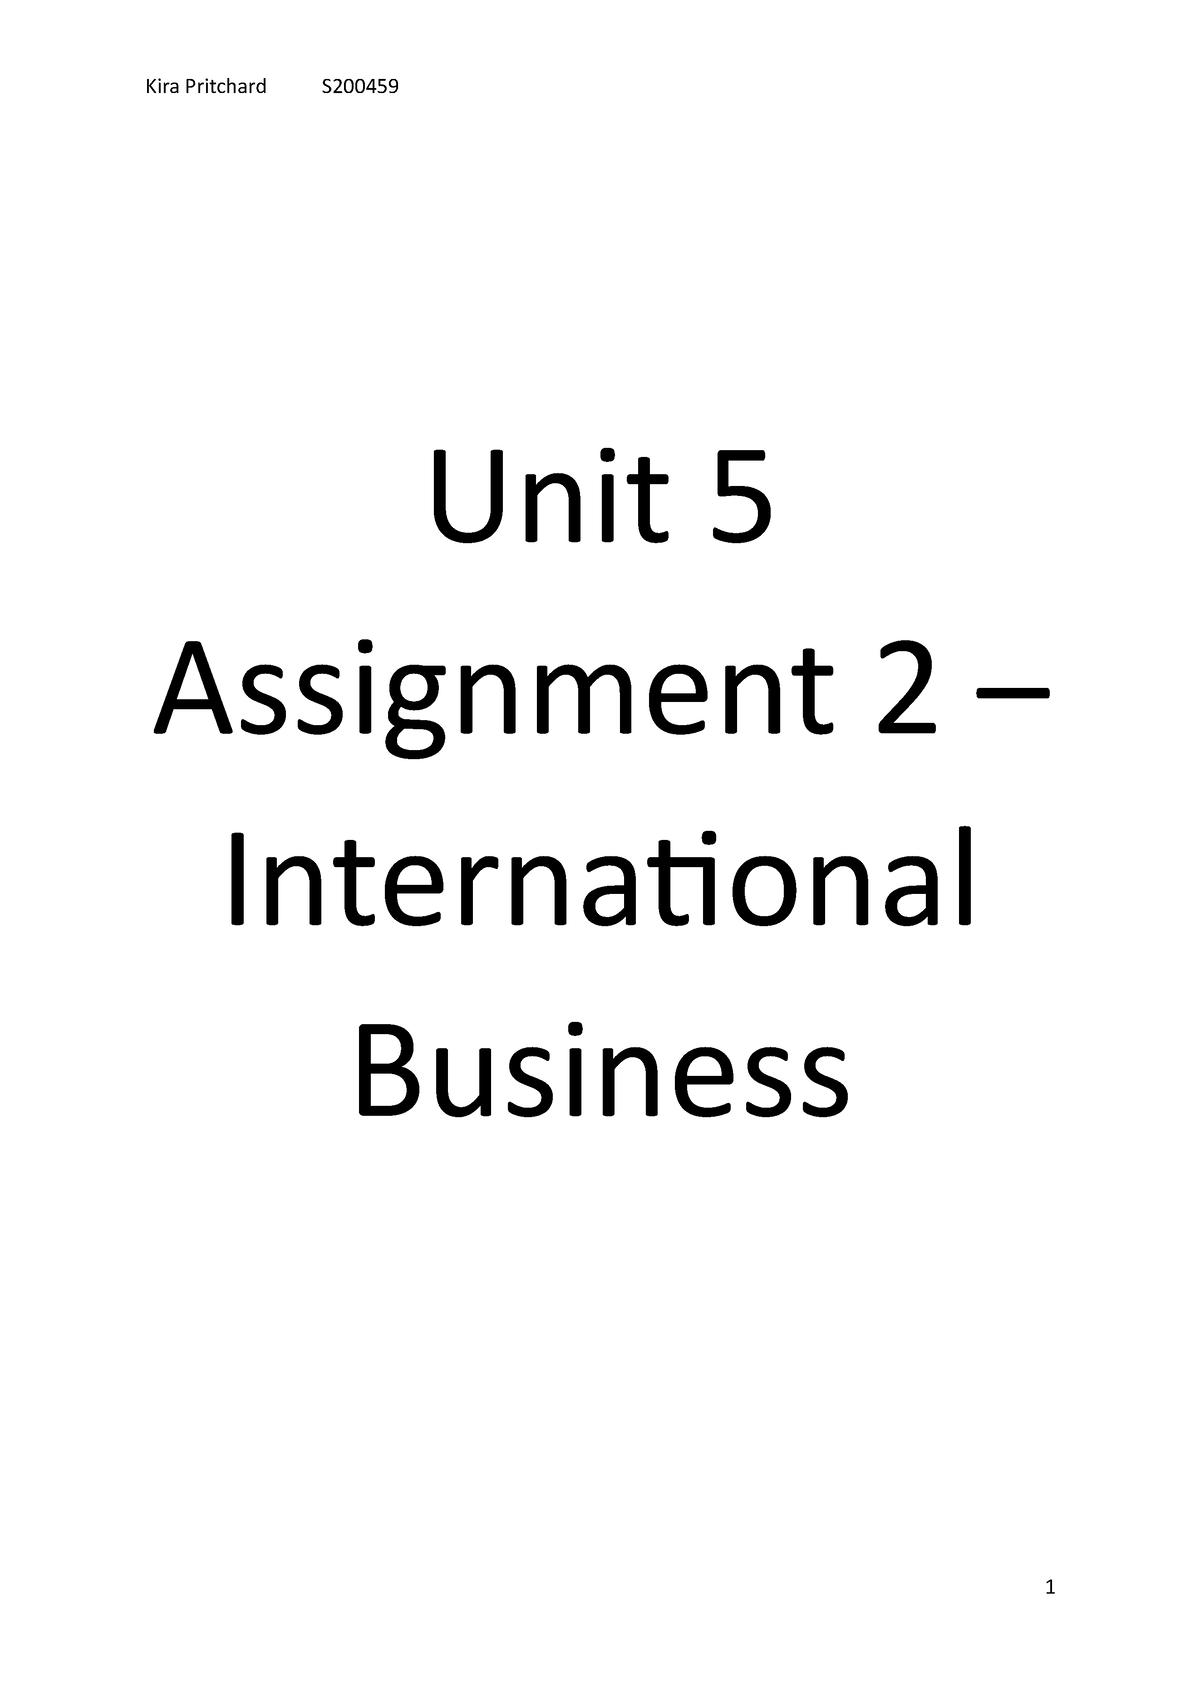 unit 5 assignment 2 business level 3